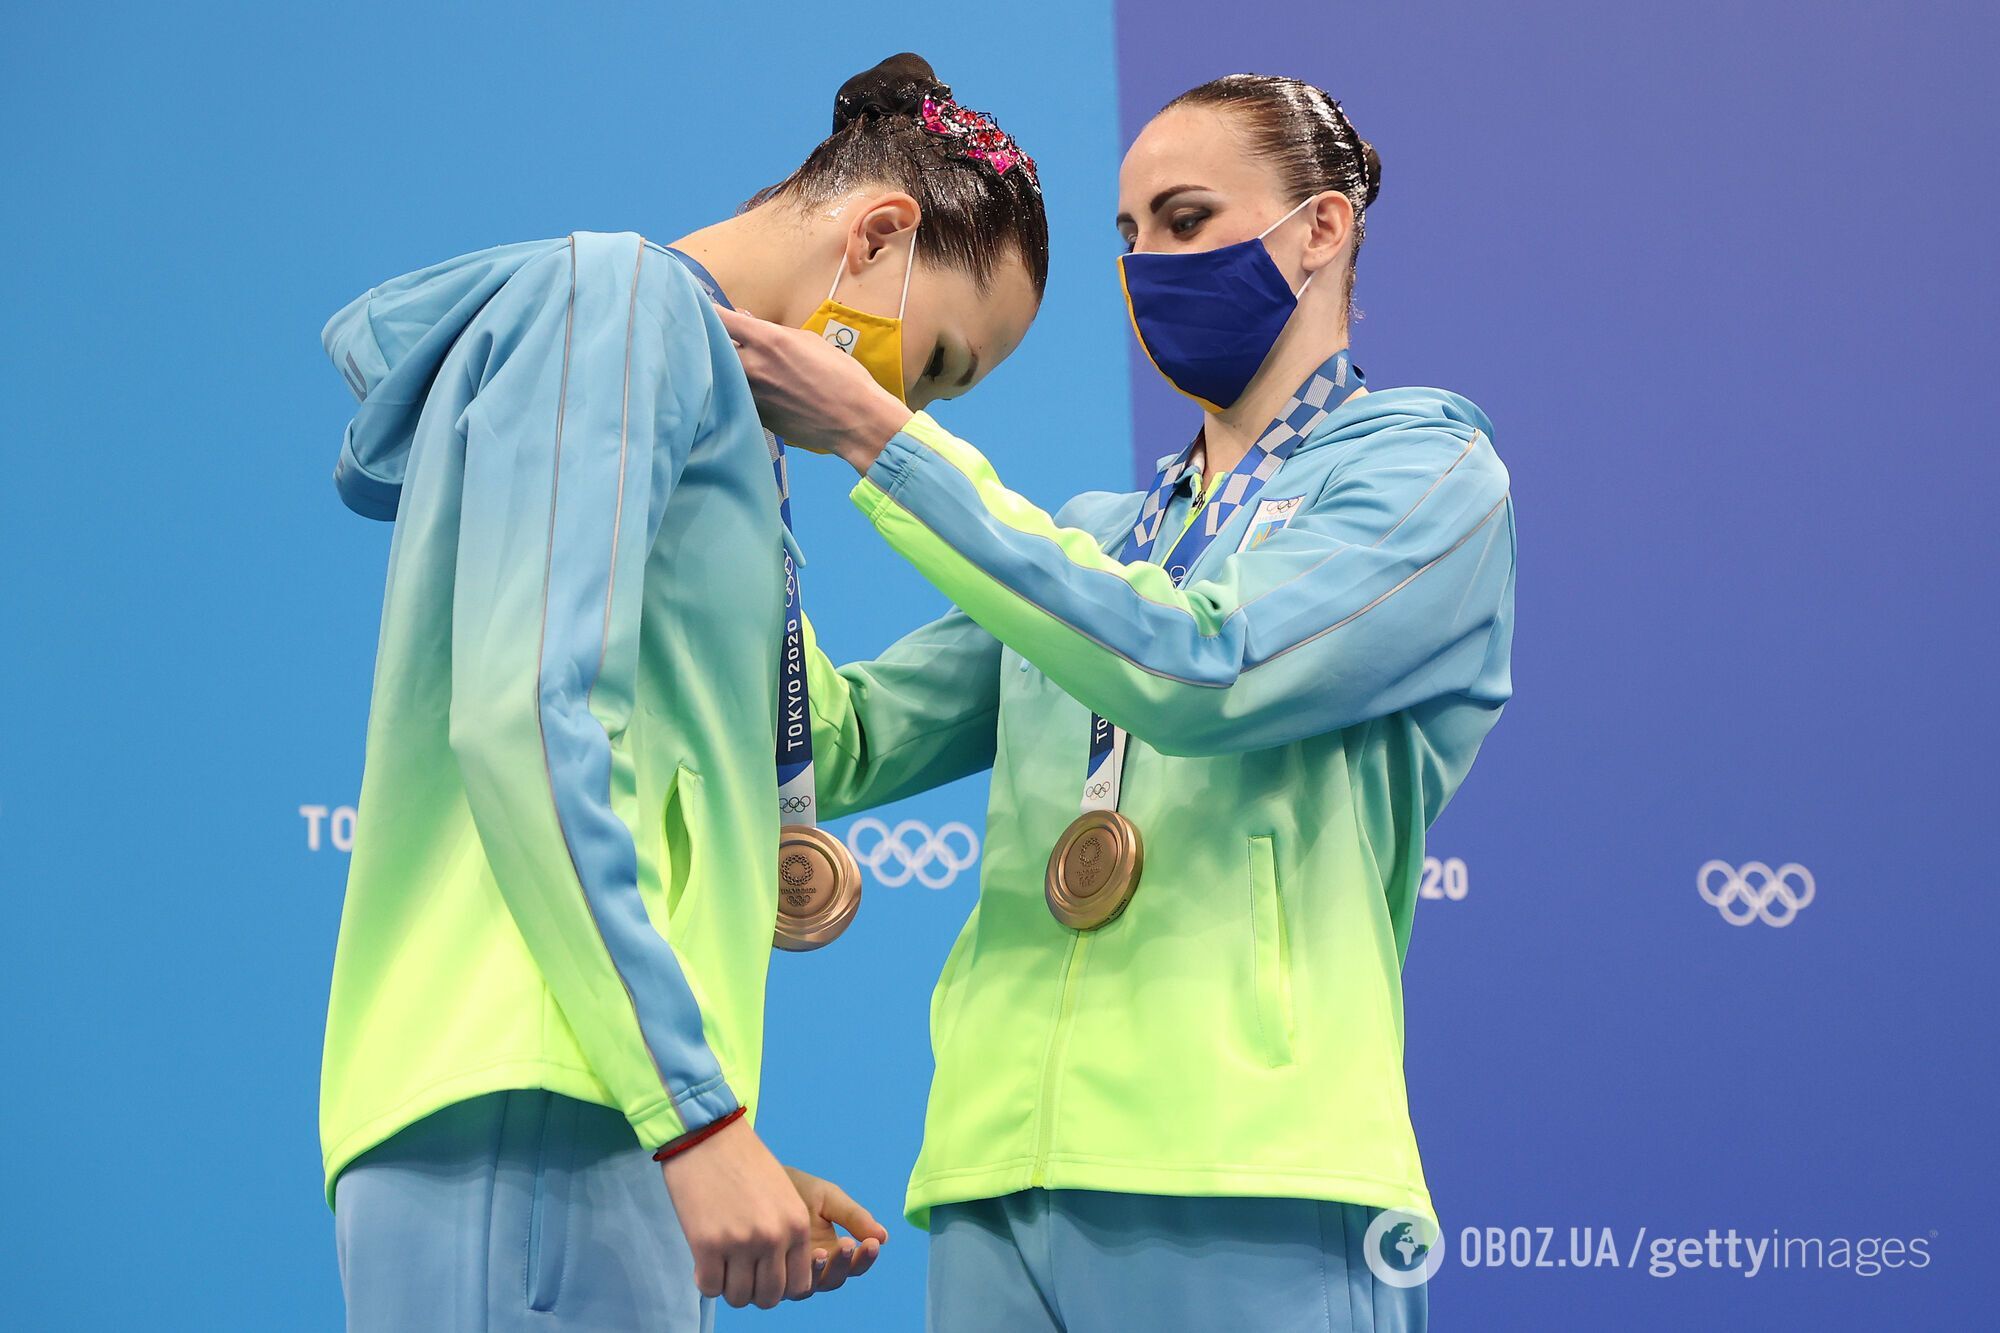 Украинских медалисток на Олимпиаде объявили как представительниц России. Видео курьеза